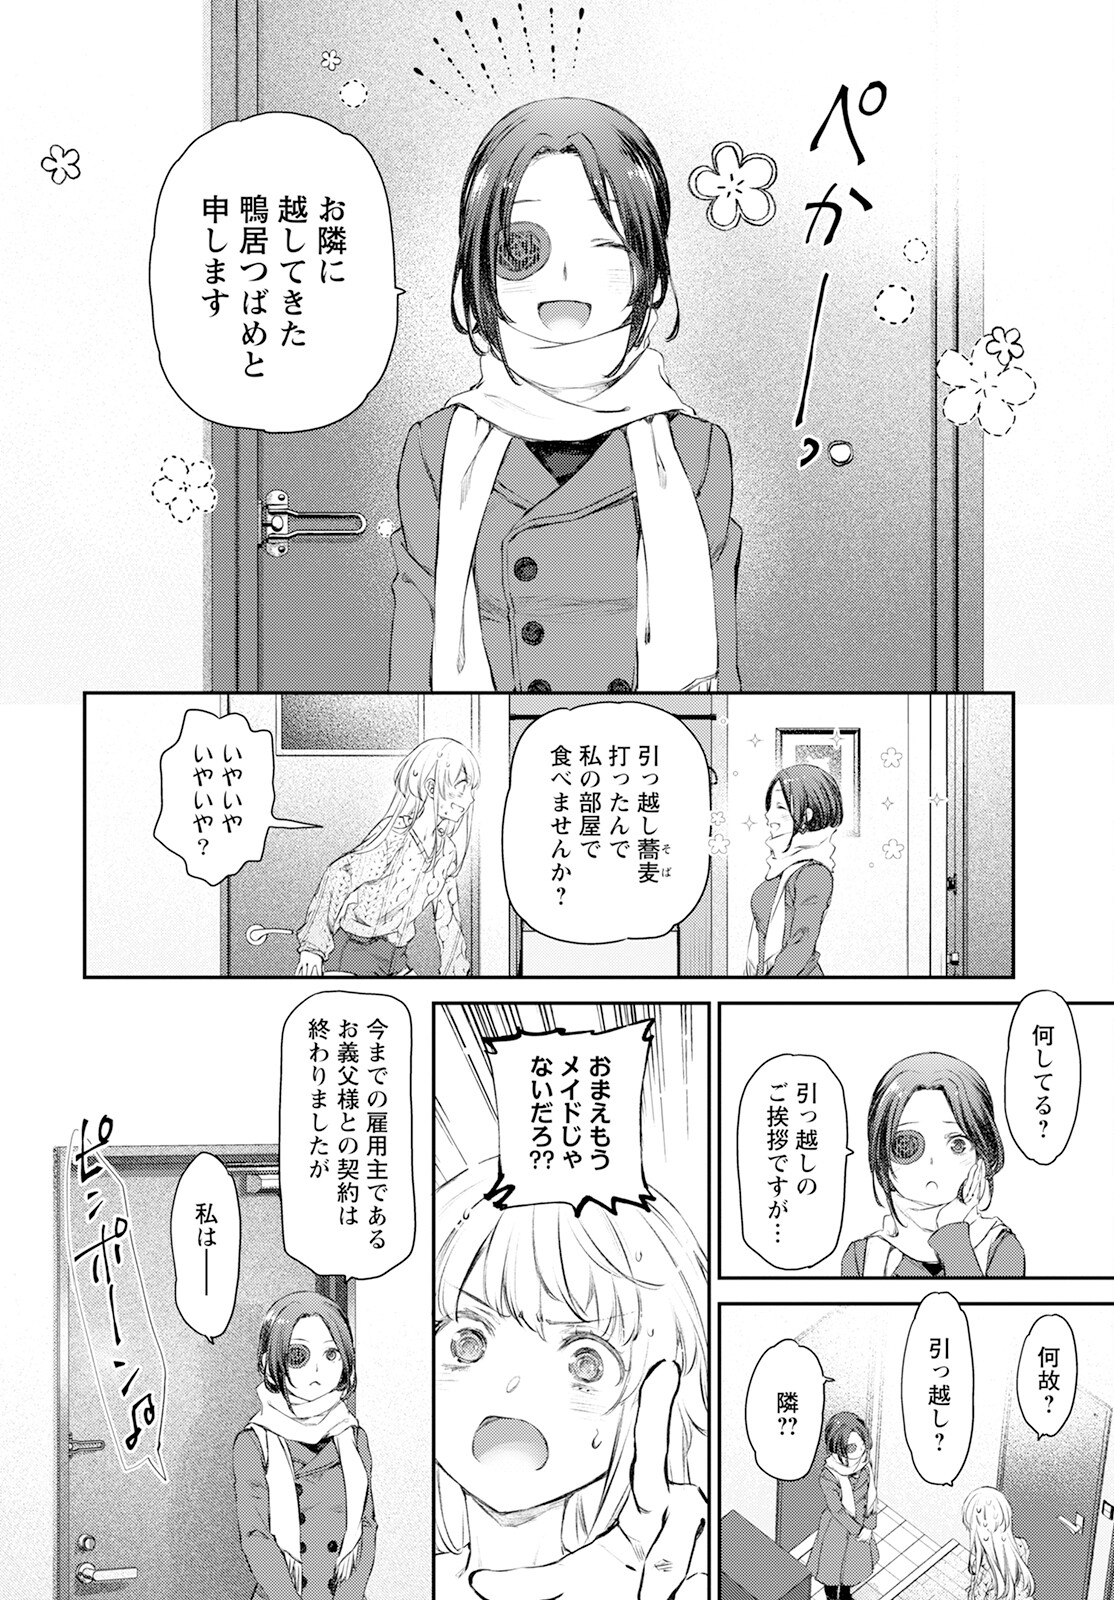 Uchi no Maid ga Uzasugiru! - Chapter 58 - Page 30